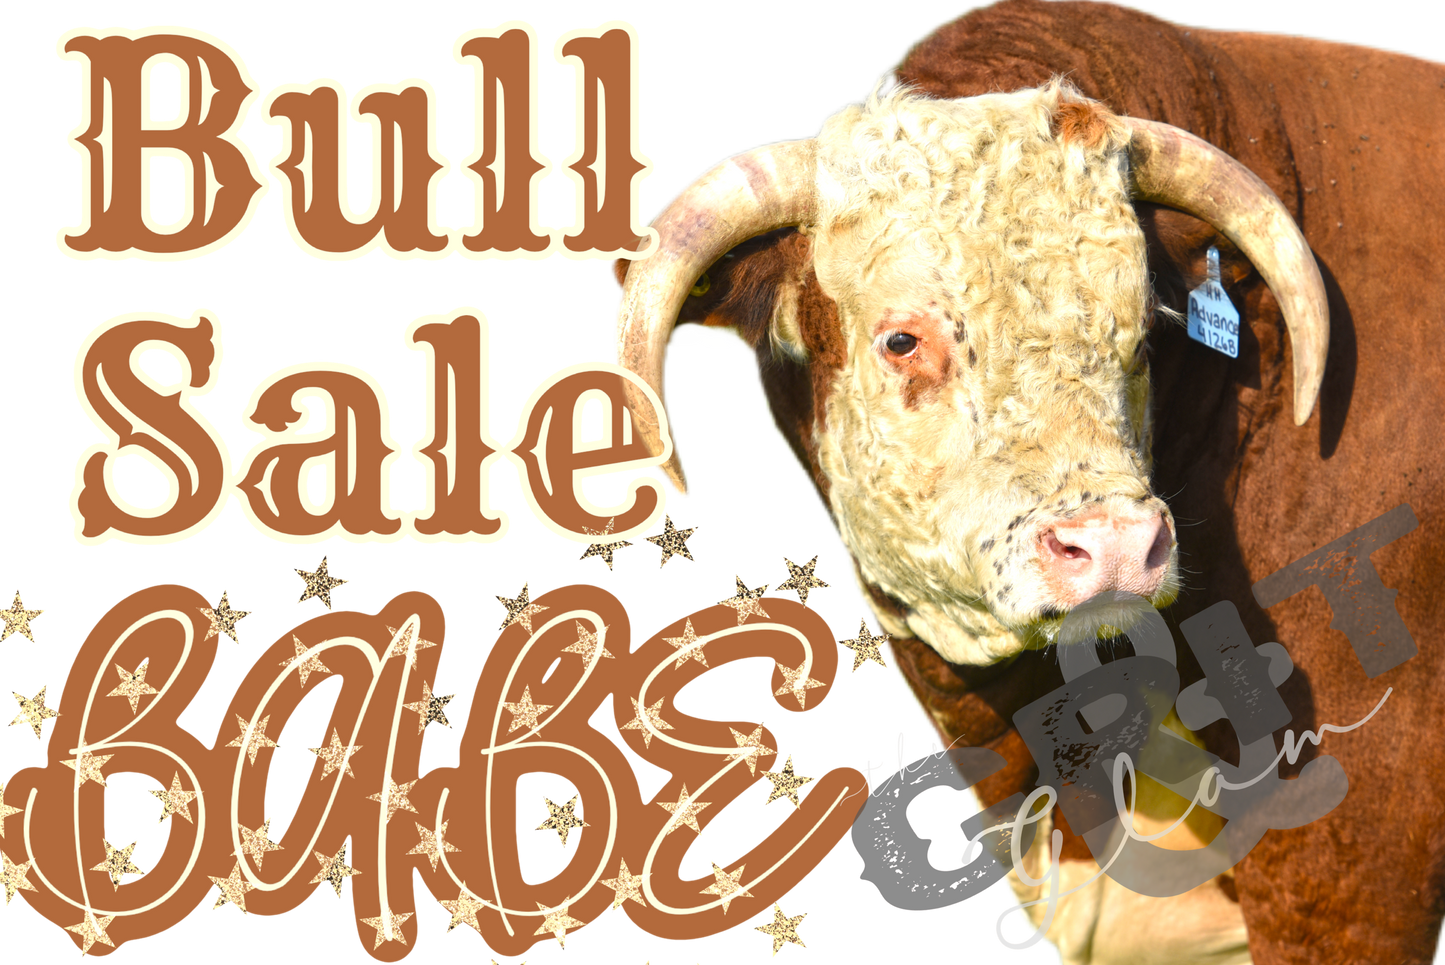 the |Bull| Sale Babe [Hereford] onesie + tee